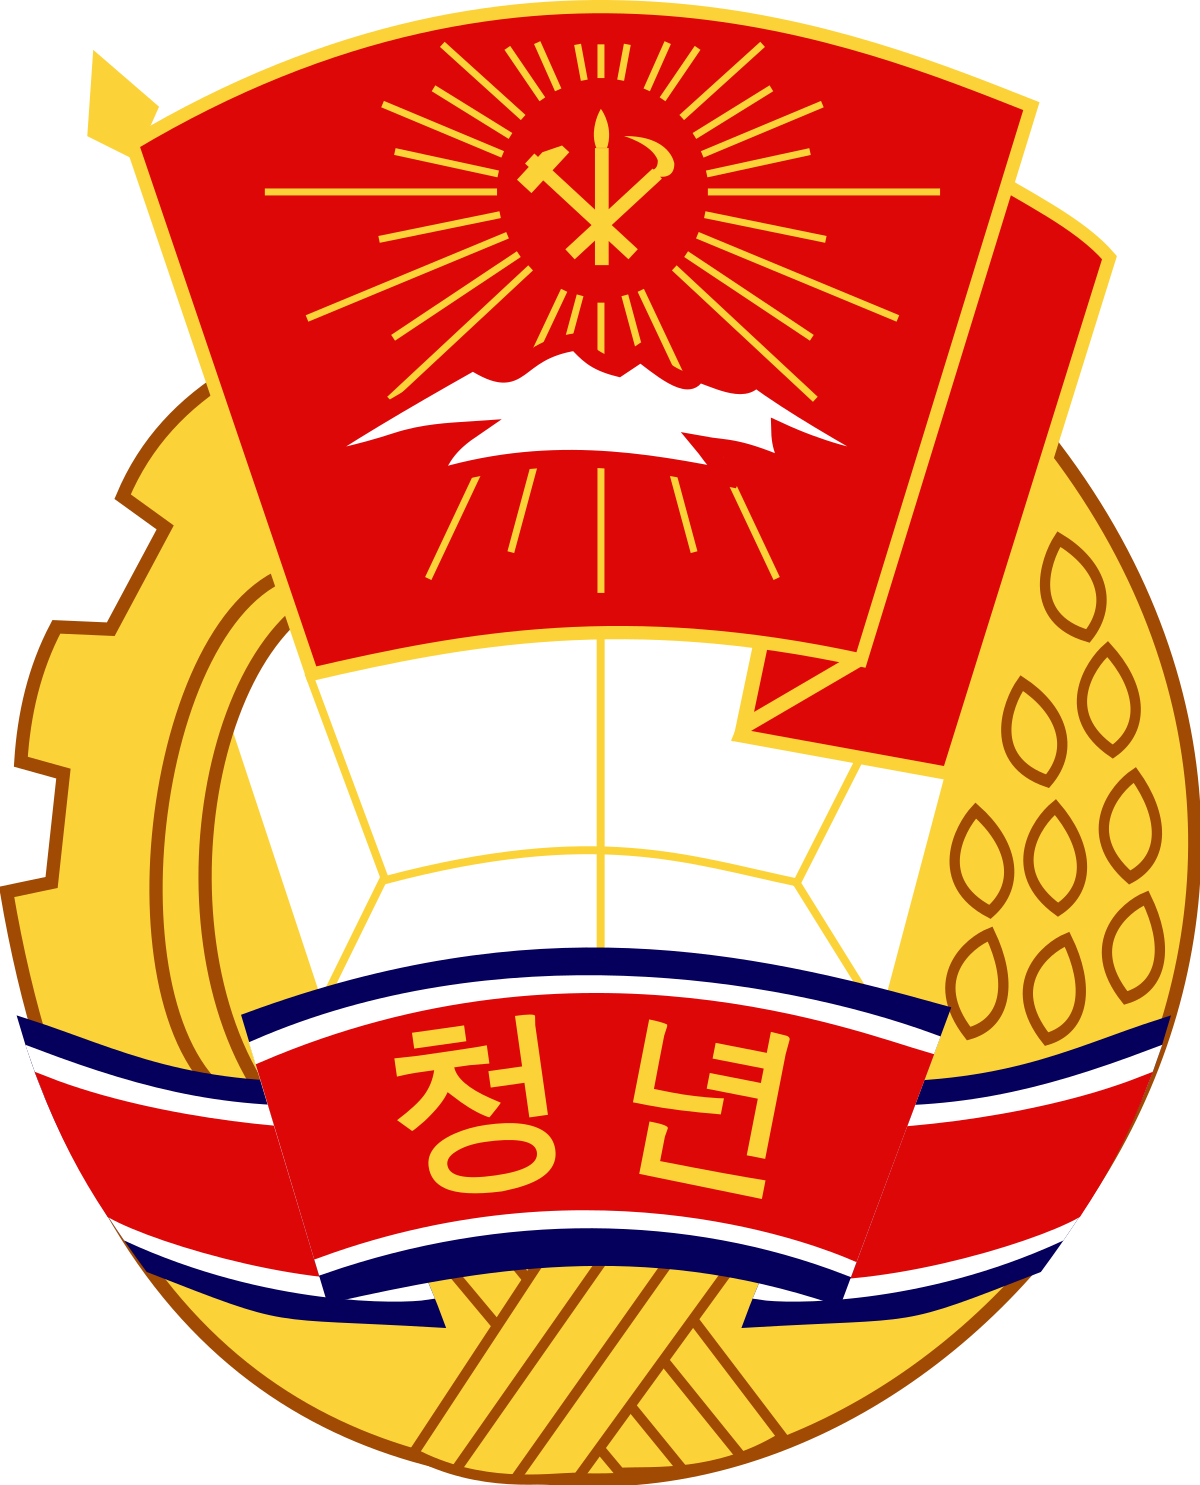 Kimilsungist Kimjongilist Youth League (1200x1485)